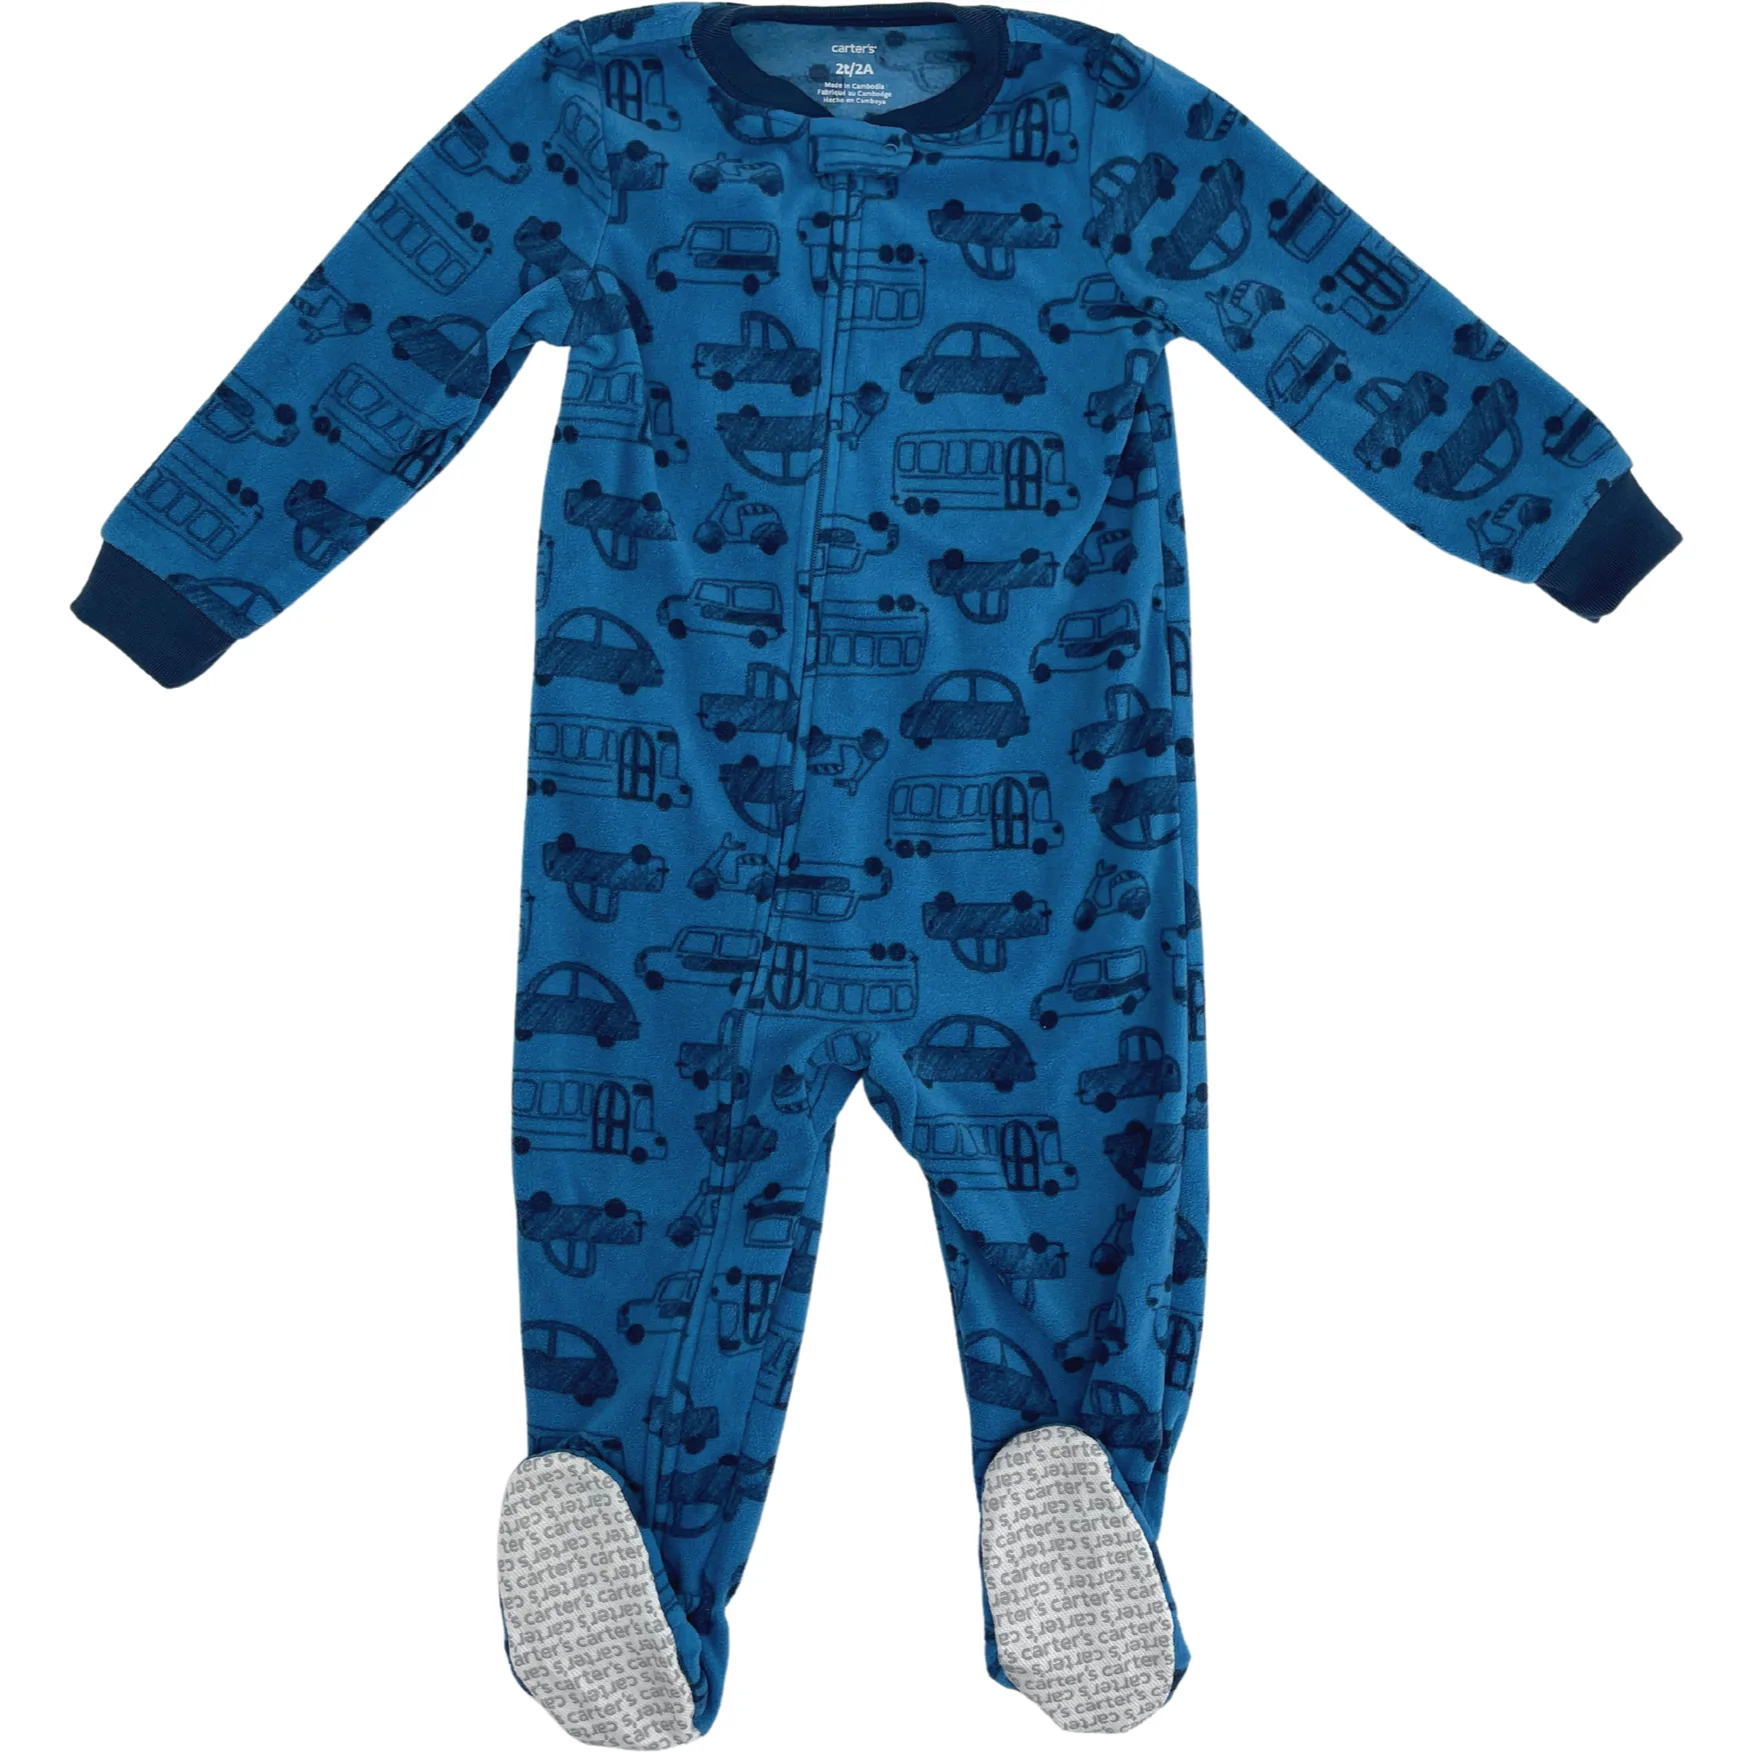 Carter's Toddler Boy's One Piece / Boy's Pyjamas / Car Theme / Blue / Size 2T **No Tags**